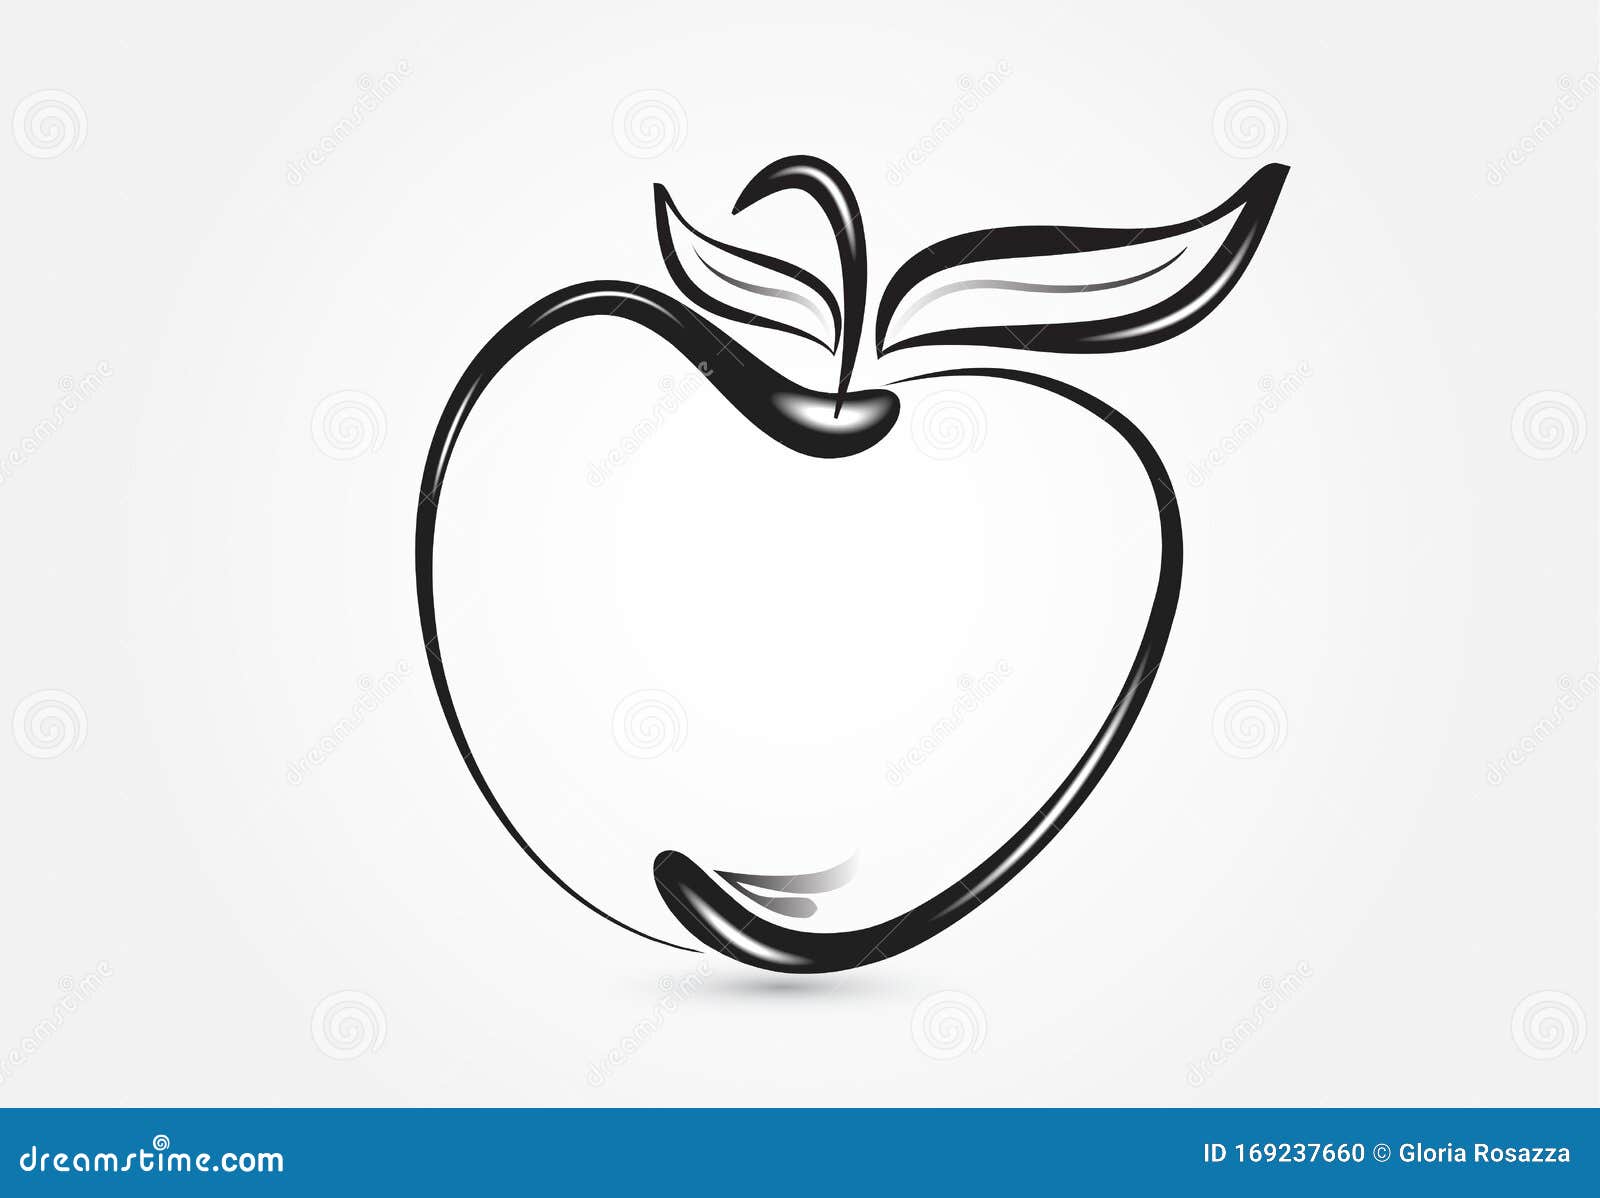 Download Apple Silhouette Logo Icon Vector Stock Vector ...